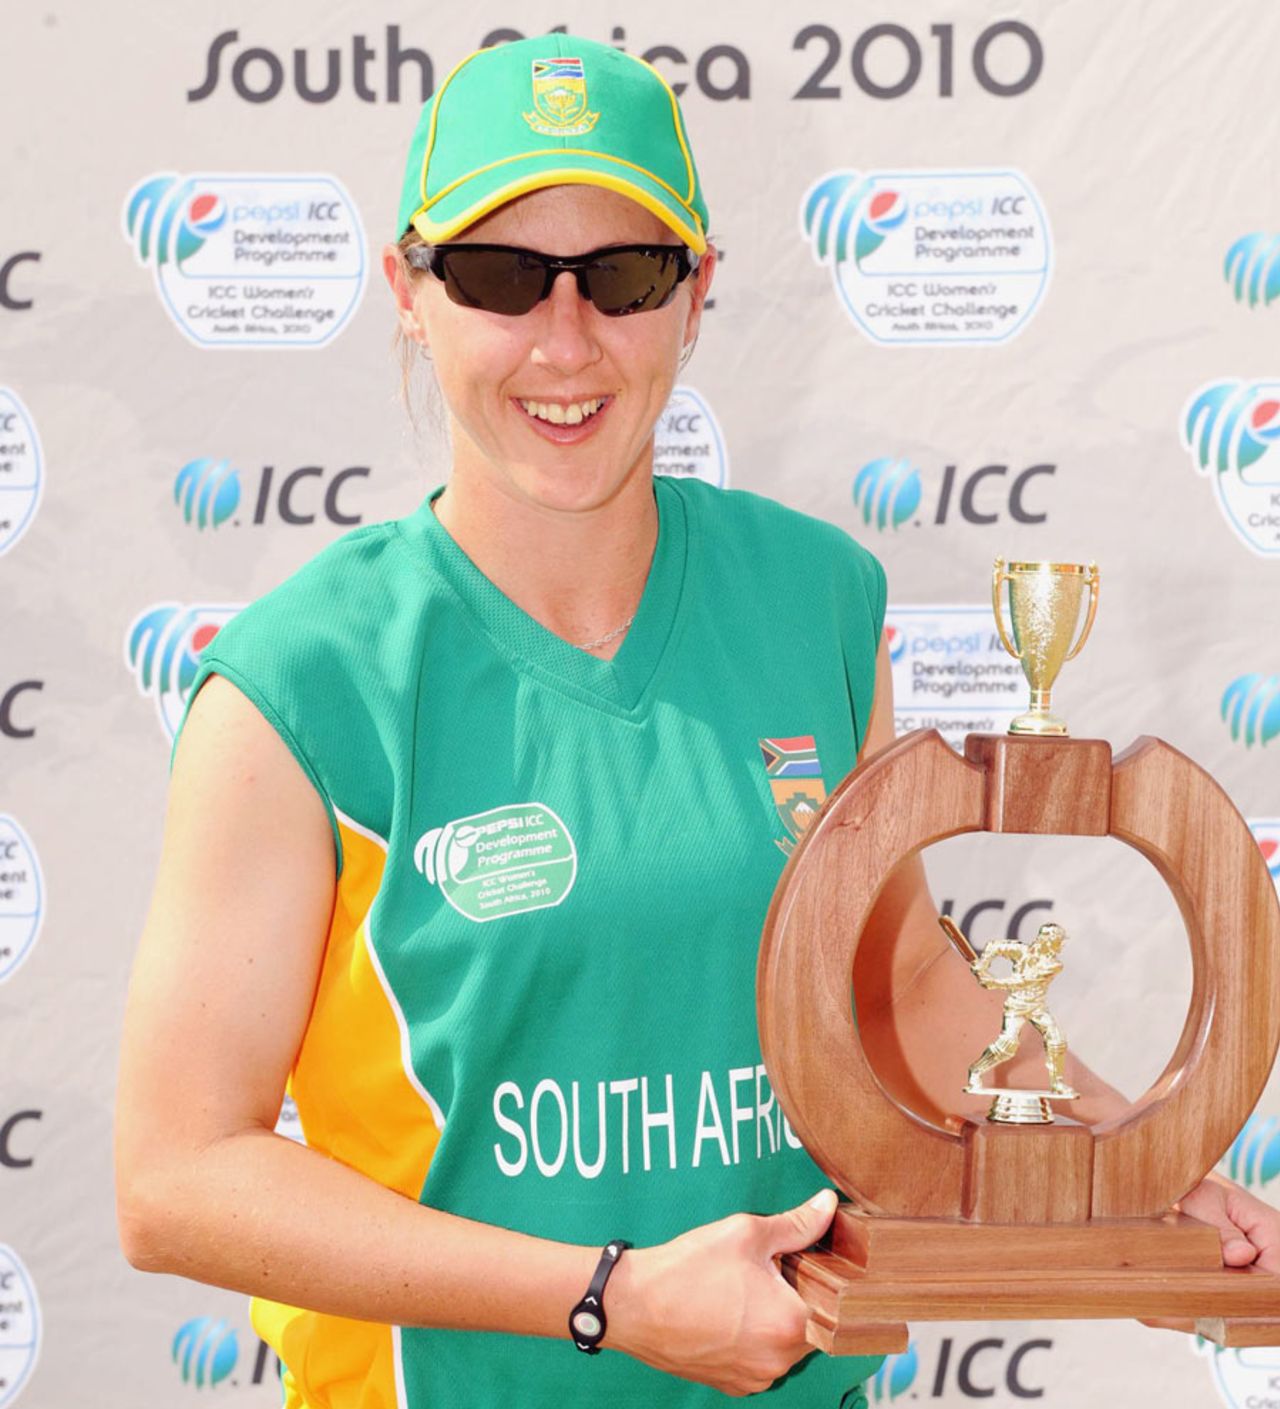 South African captain Cri-zelda Brits with the trophy, ICC Women's Cricket Challenge, Potchefstroom, October 12, 2010